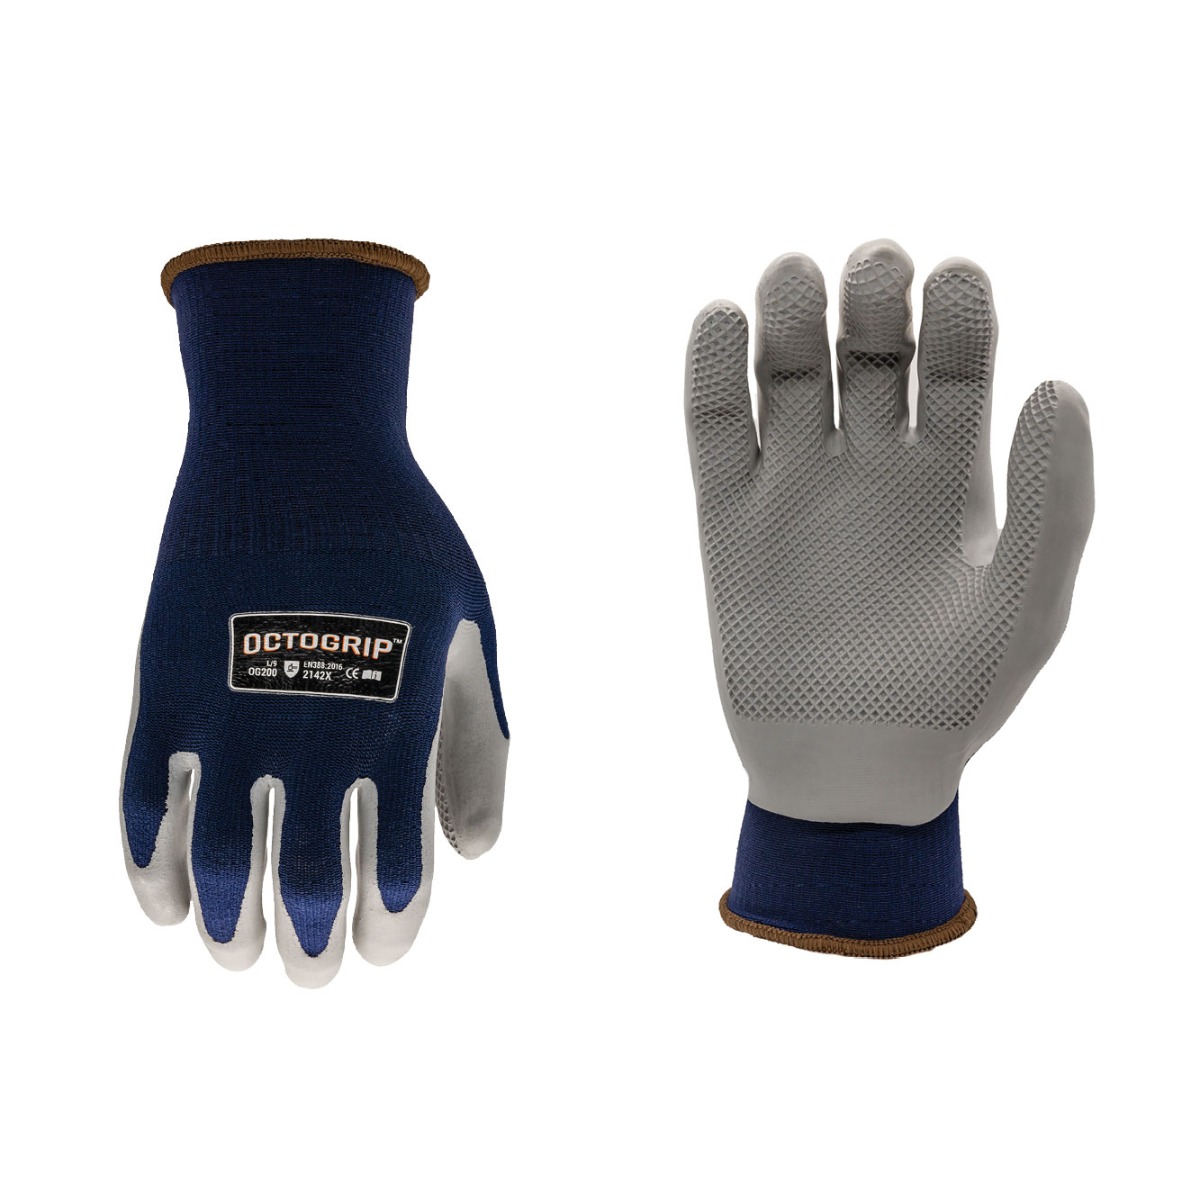 HD High Flexibility & Dexterity Grip Glove 15g - Size M